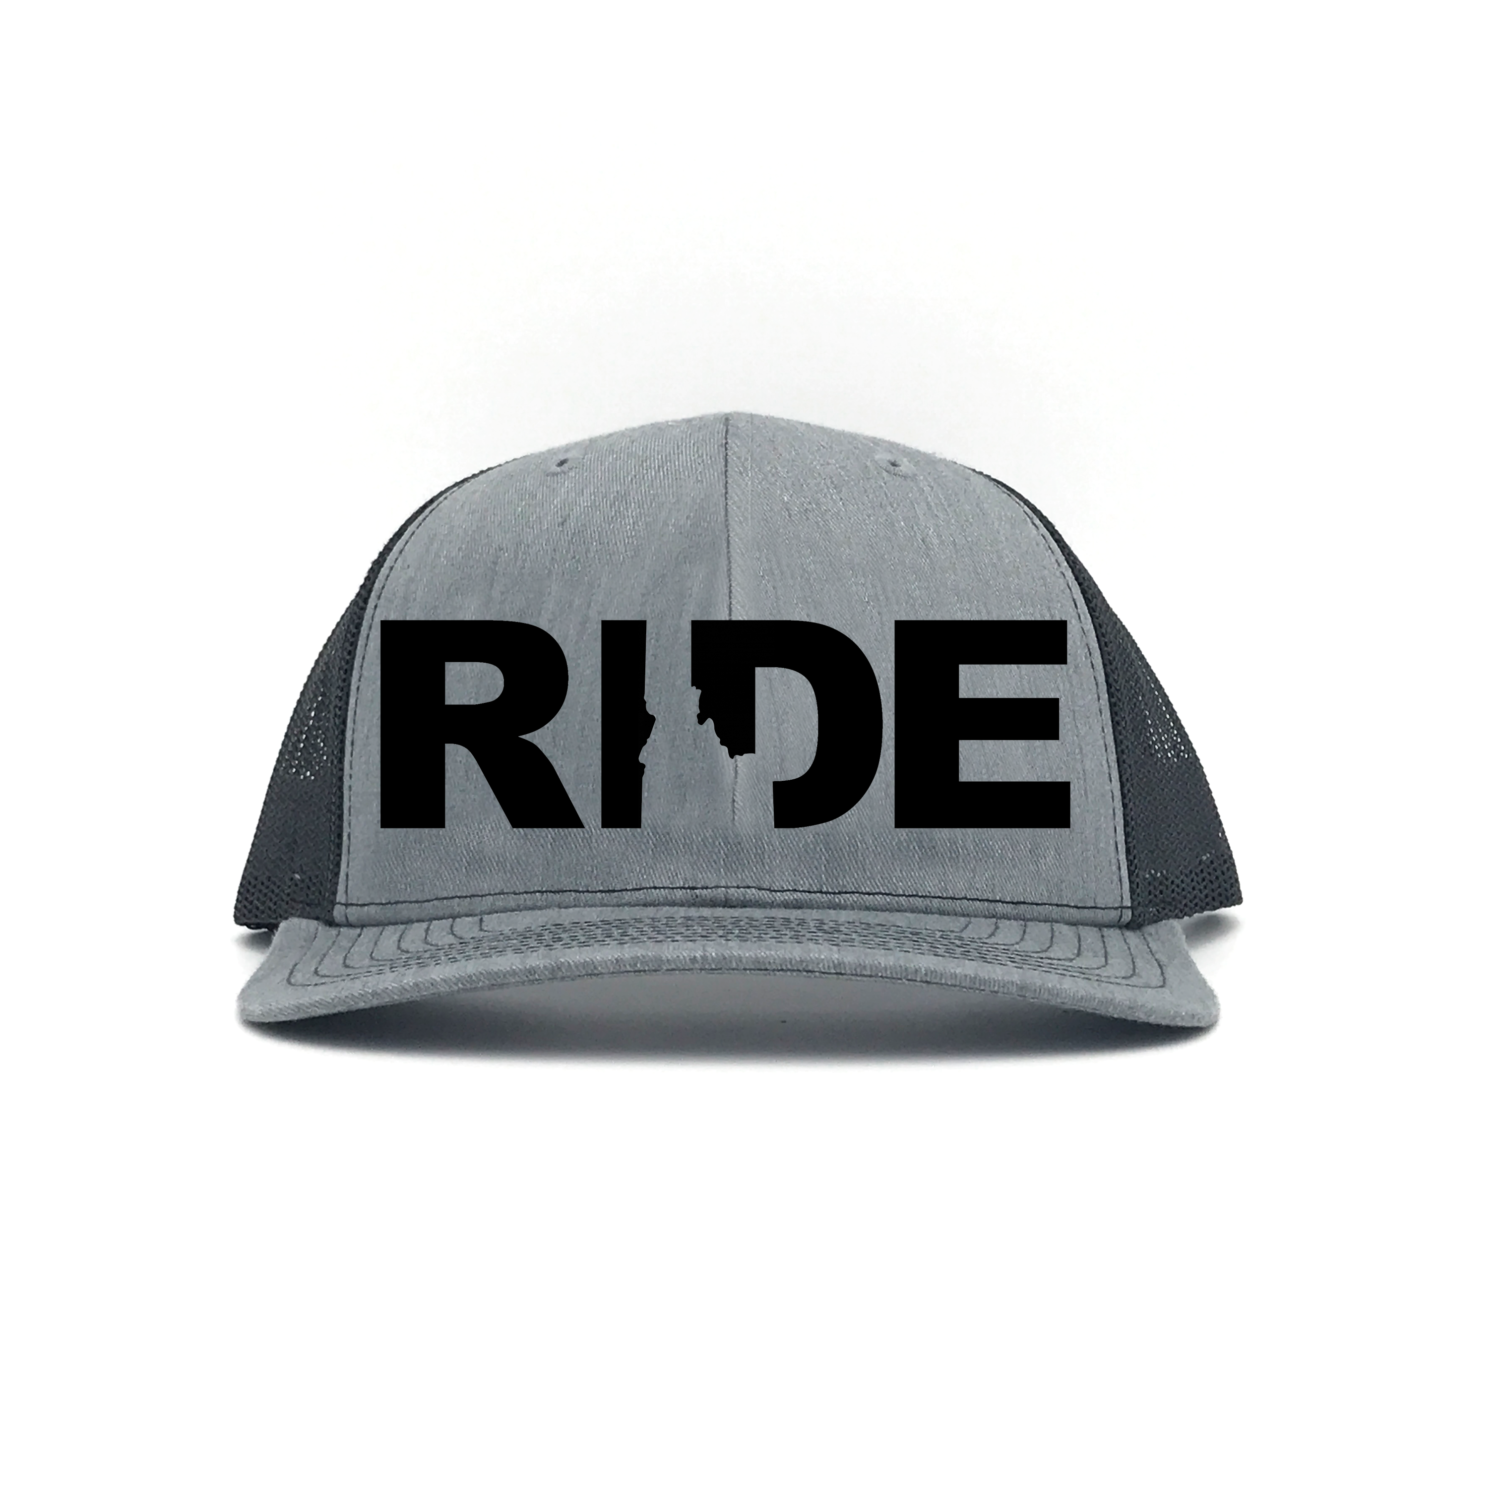 Ride Idaho Classic Pro 3D Puff Embroidered Snapback Trucker Hat Heather Gray/Black